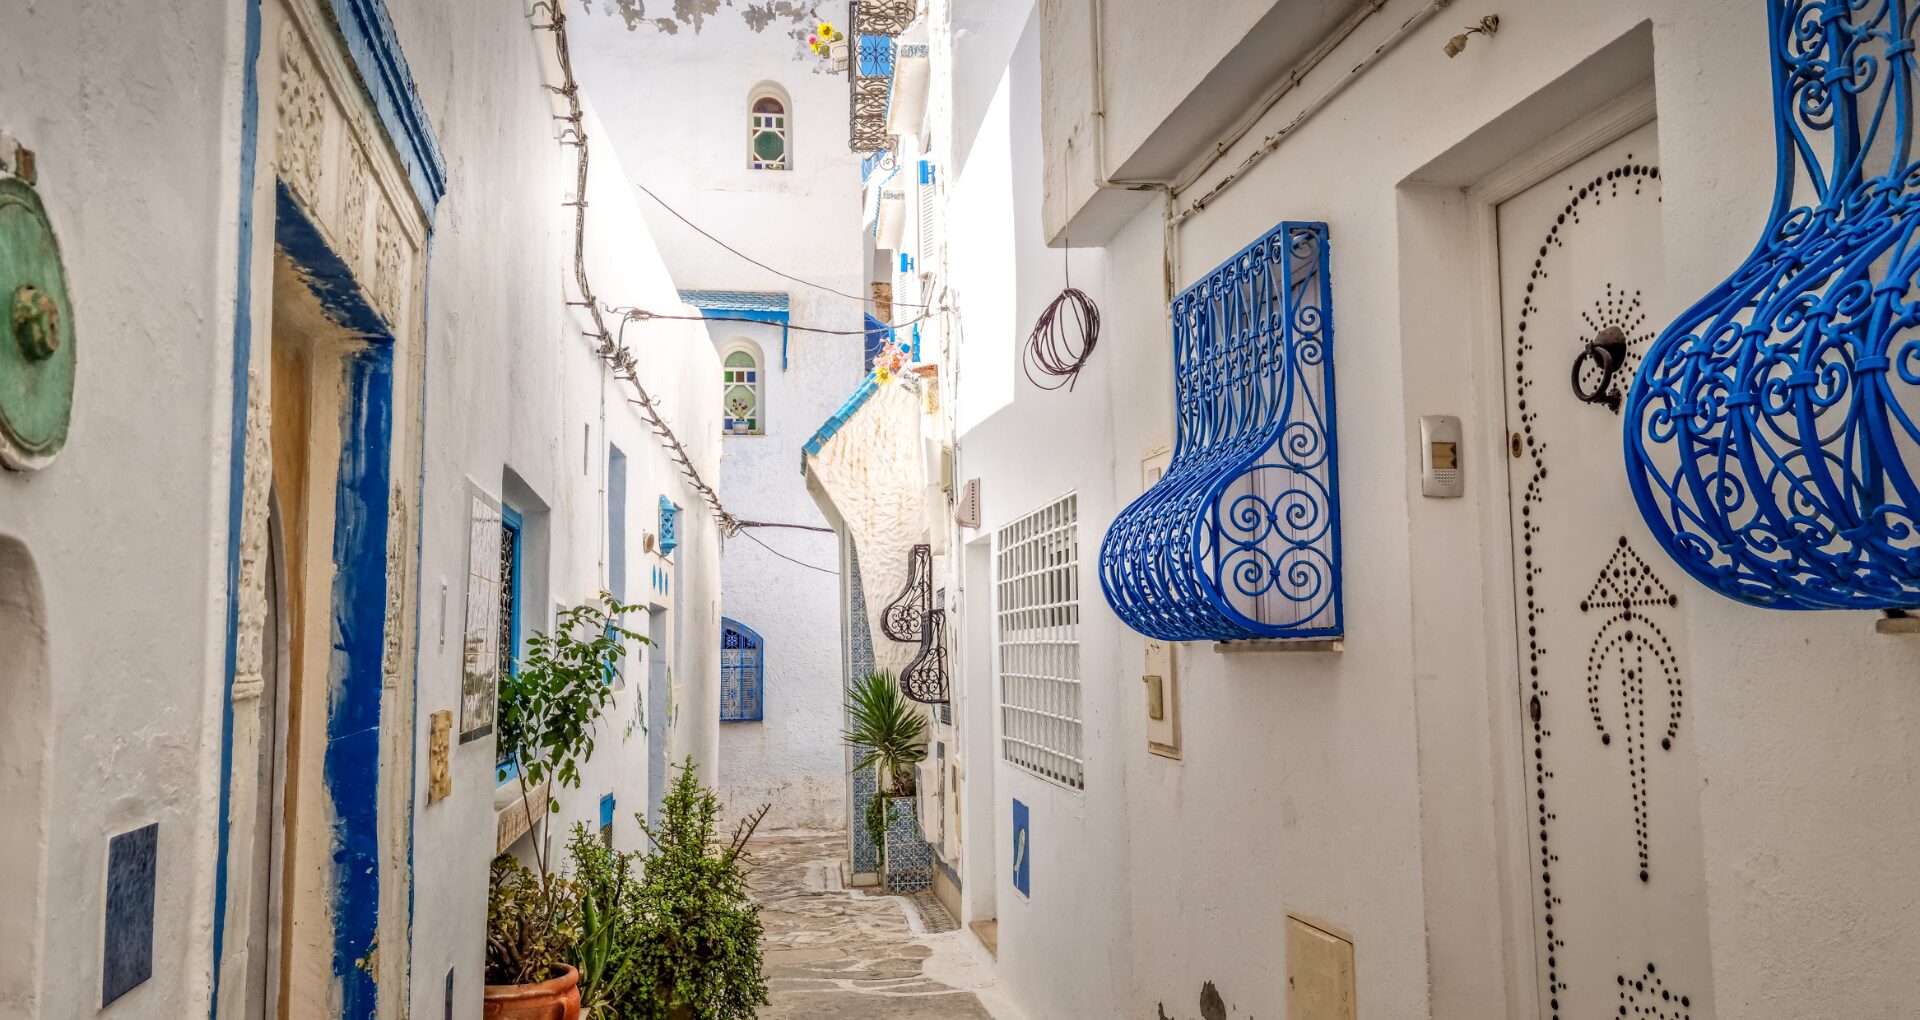 Une rue blanche et bleue en Tunisie